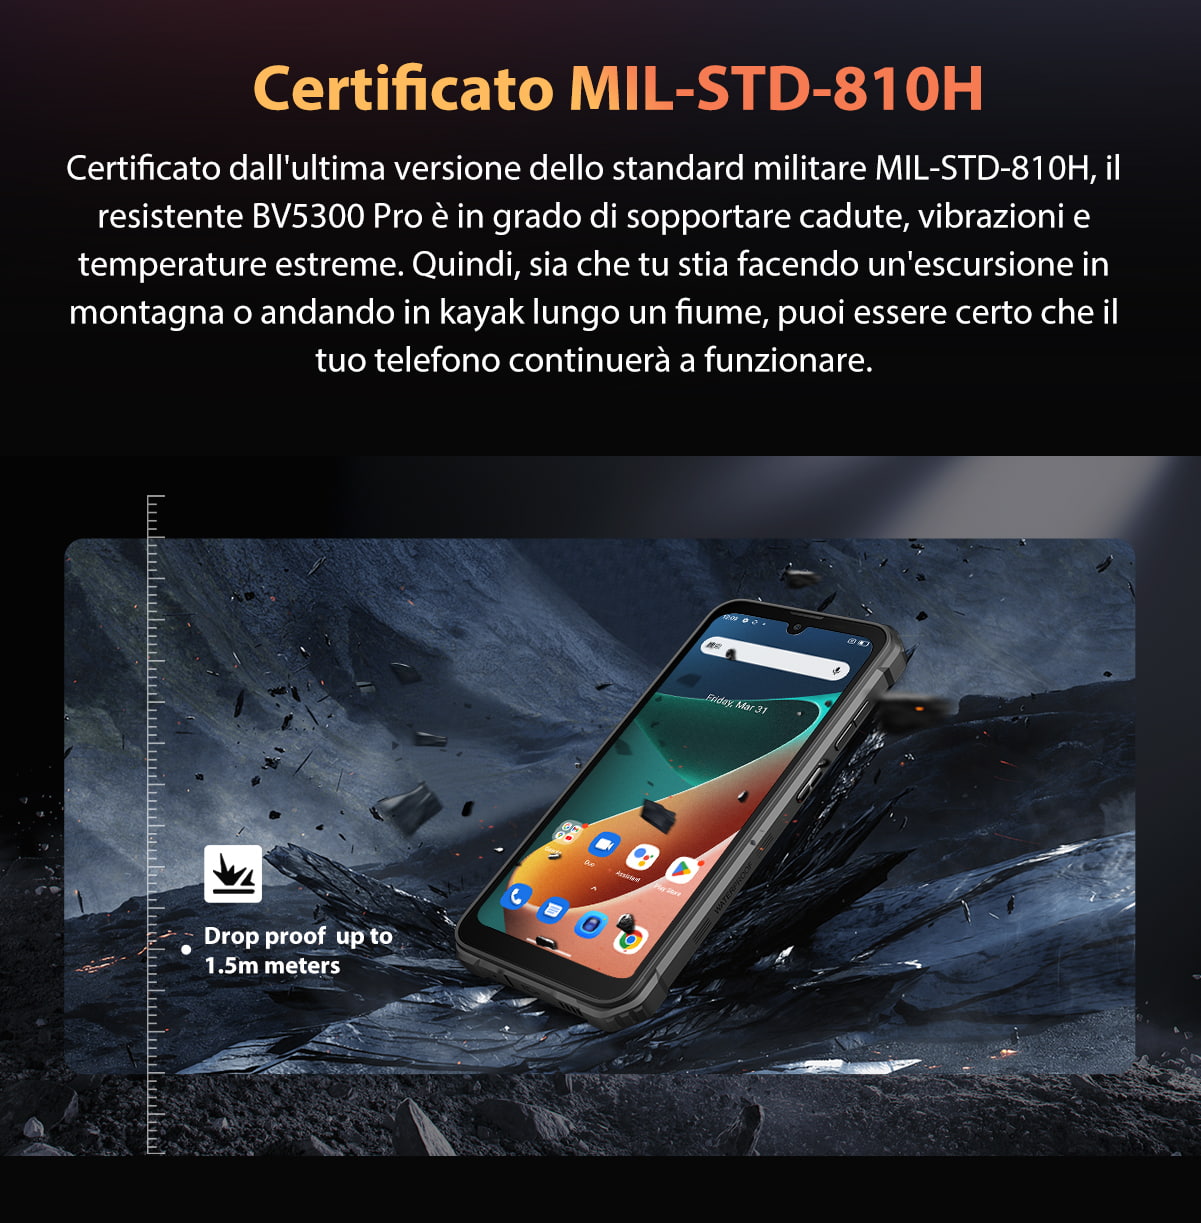 BV5300 Pro italian description